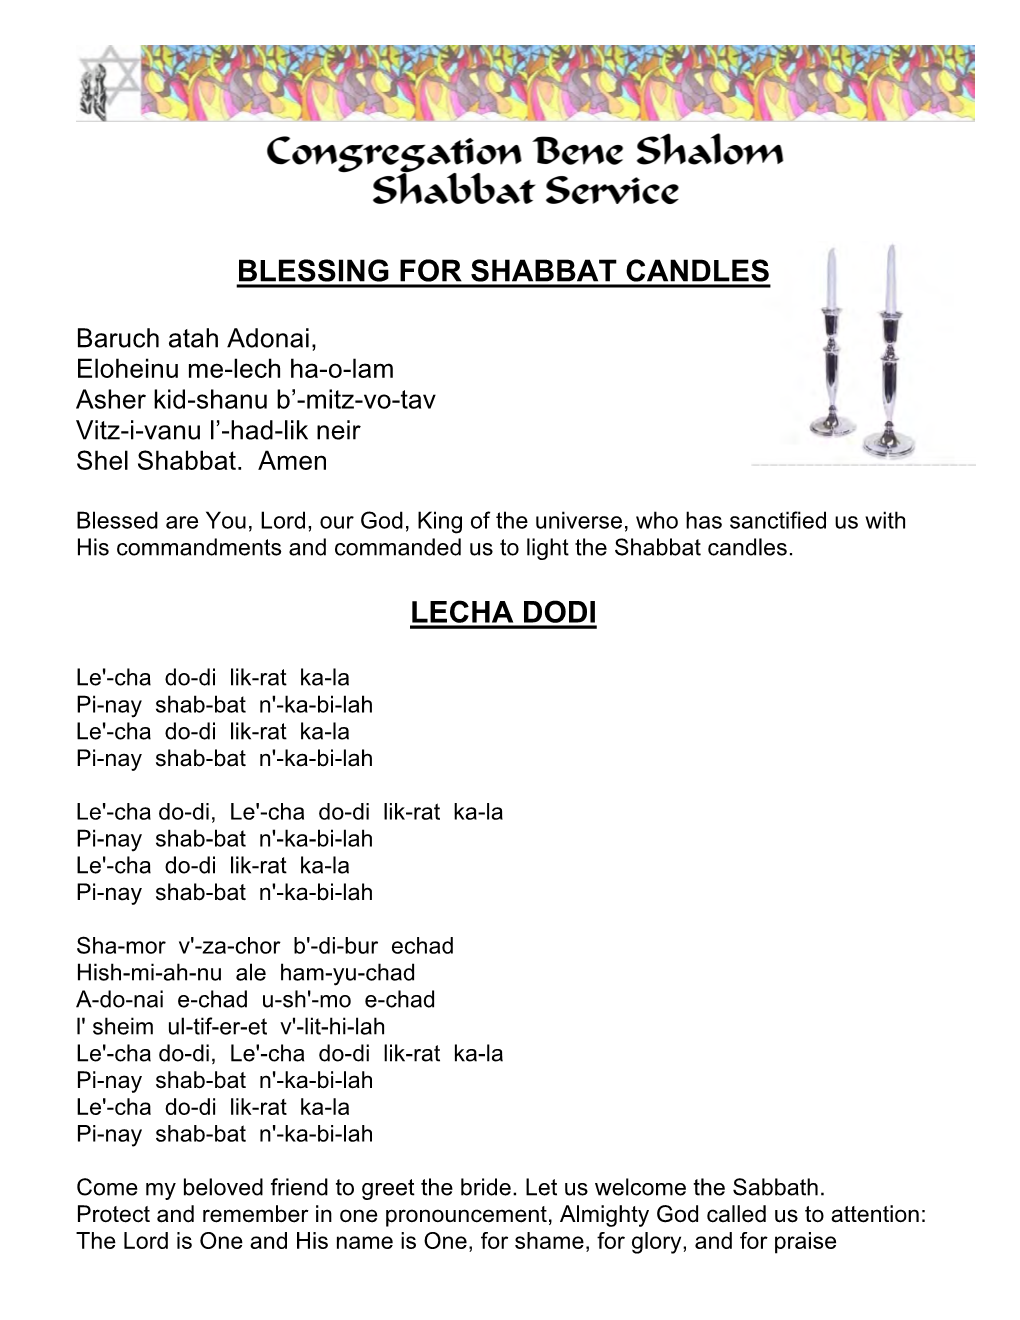 Transliterated Shabbat Songs